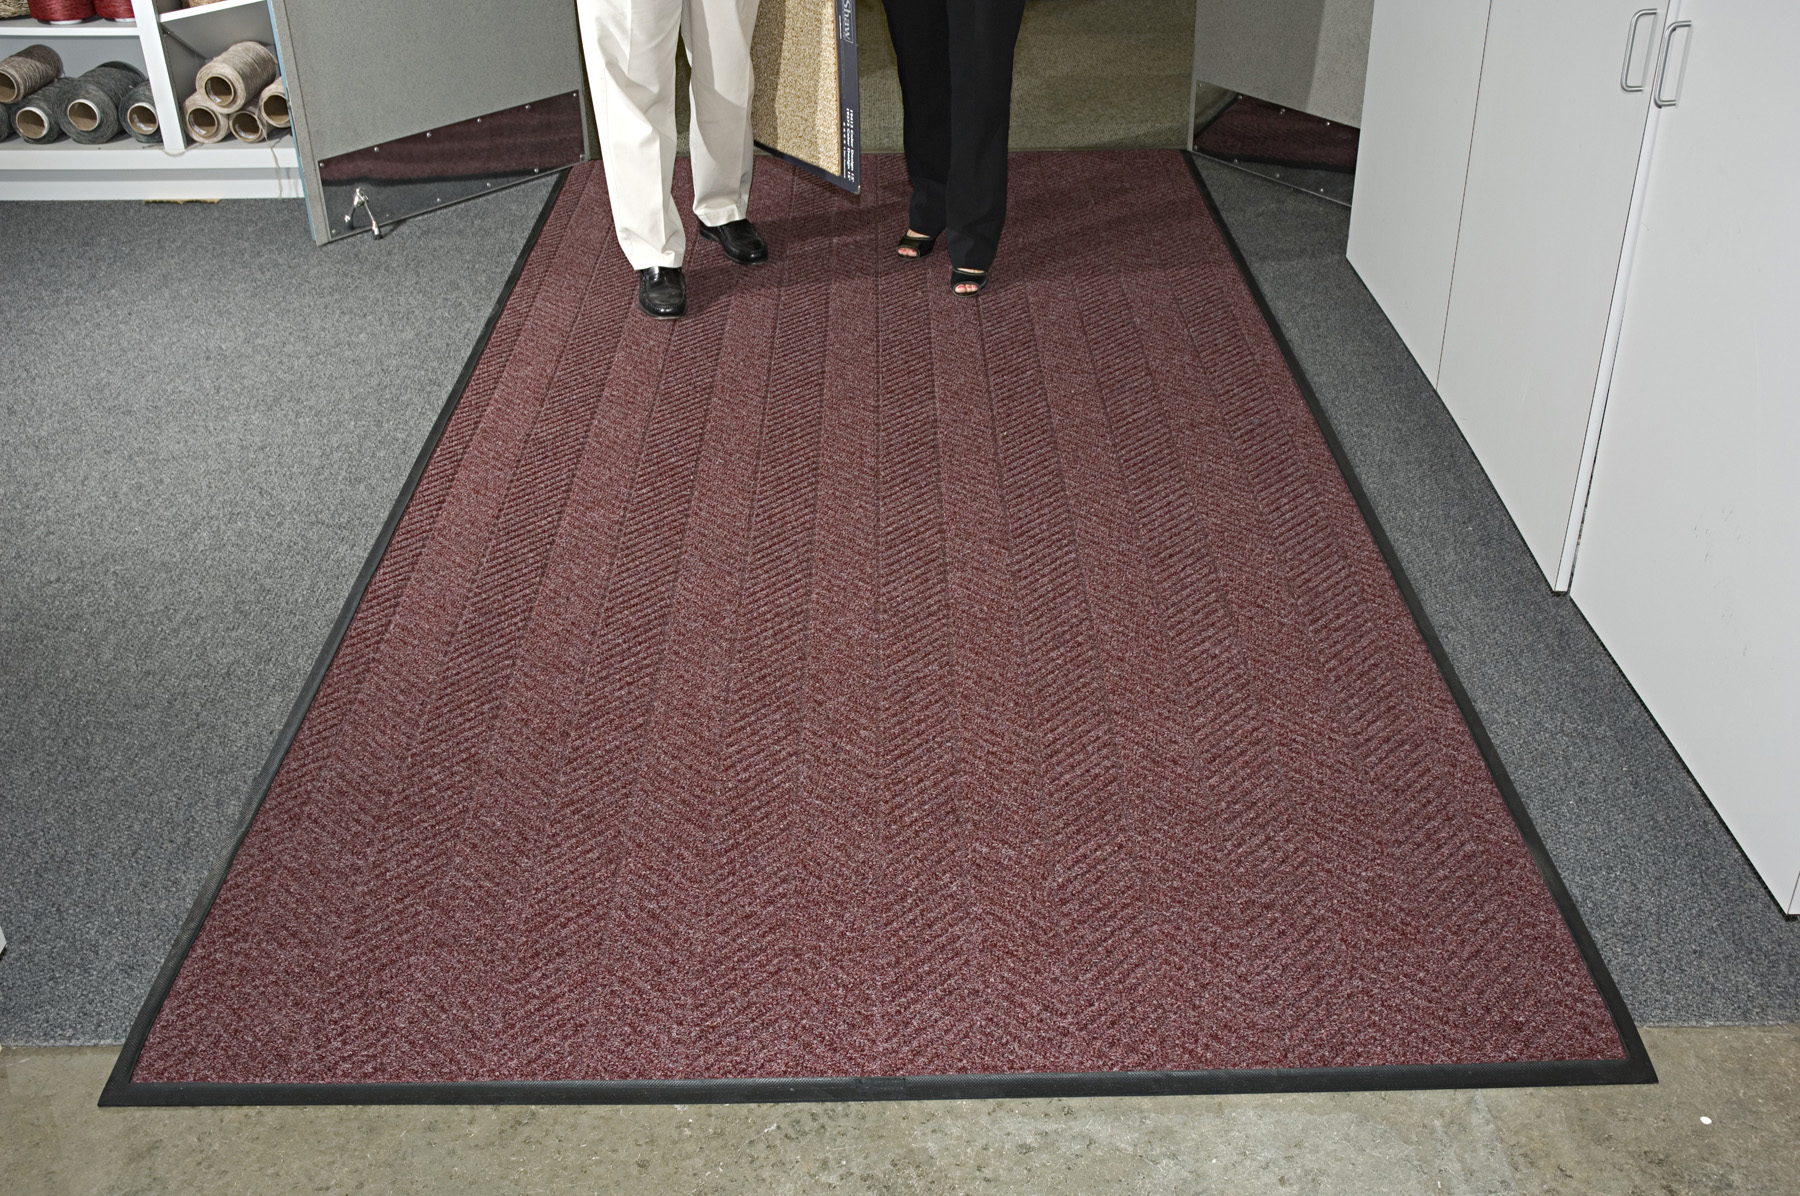 Waterhog Eco Elite Fashion Carpet Mats are designed for commercial entrances that require attractive but durable matting.